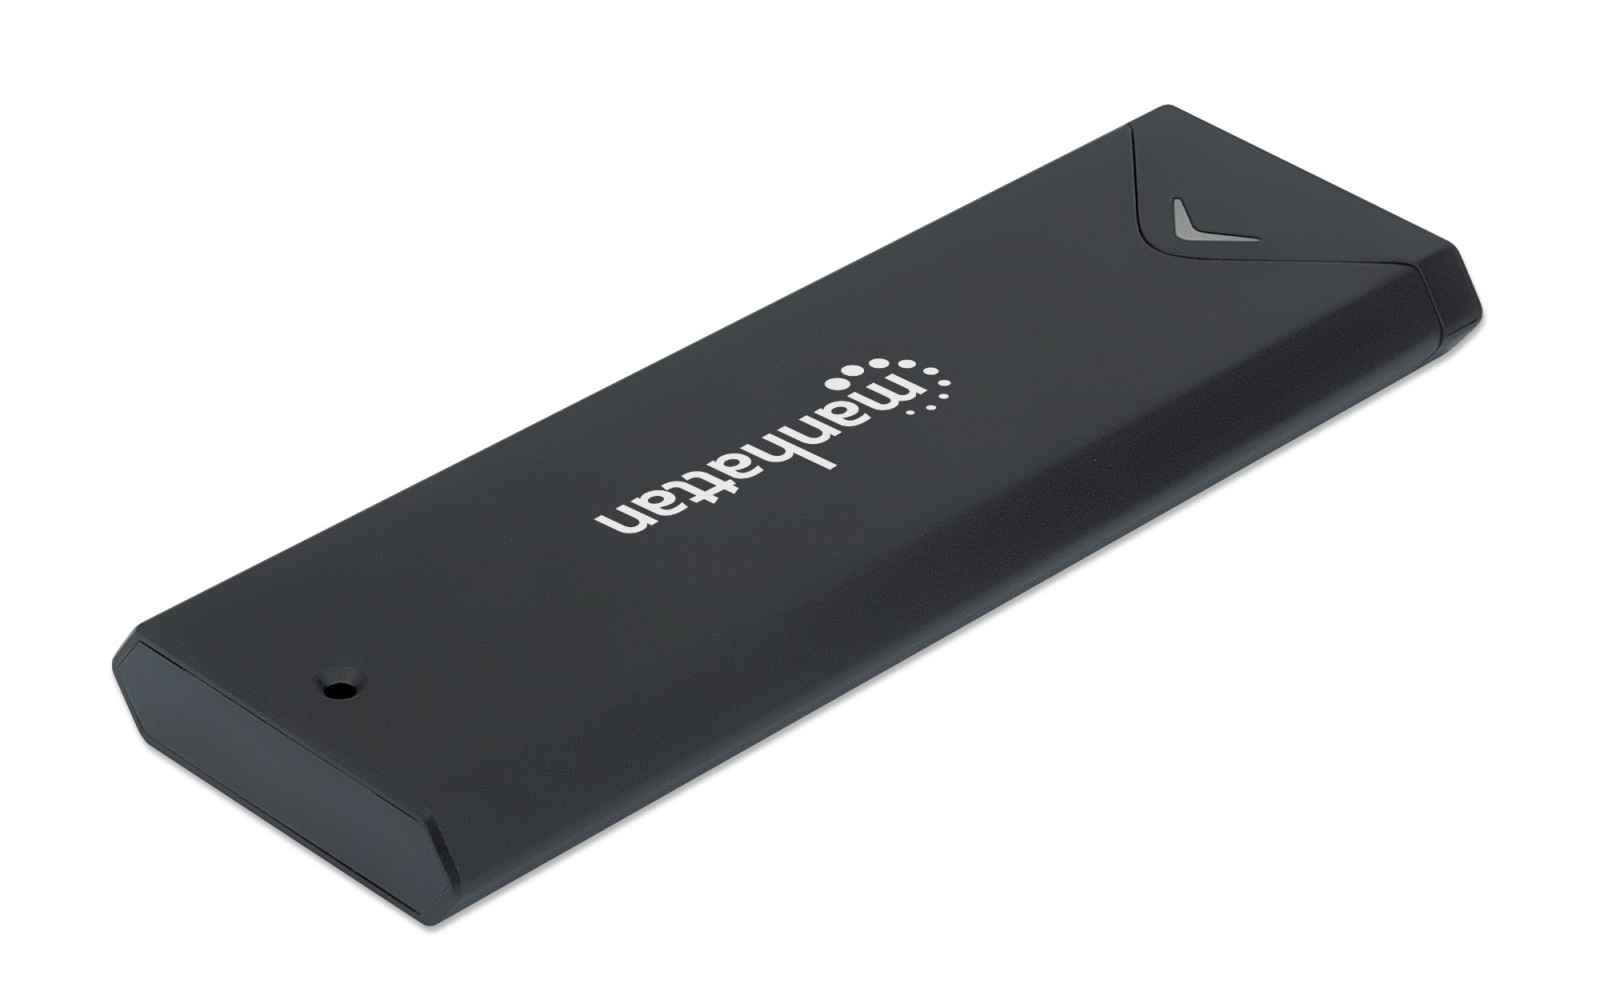 Manhattan M.2 NVMe SSD Enclosure, USB-C Female Connection, 10 Gbps (USB 3.2 Gen2 aka USB 3.1), UASP-compliant, Aluminum, Black, Box